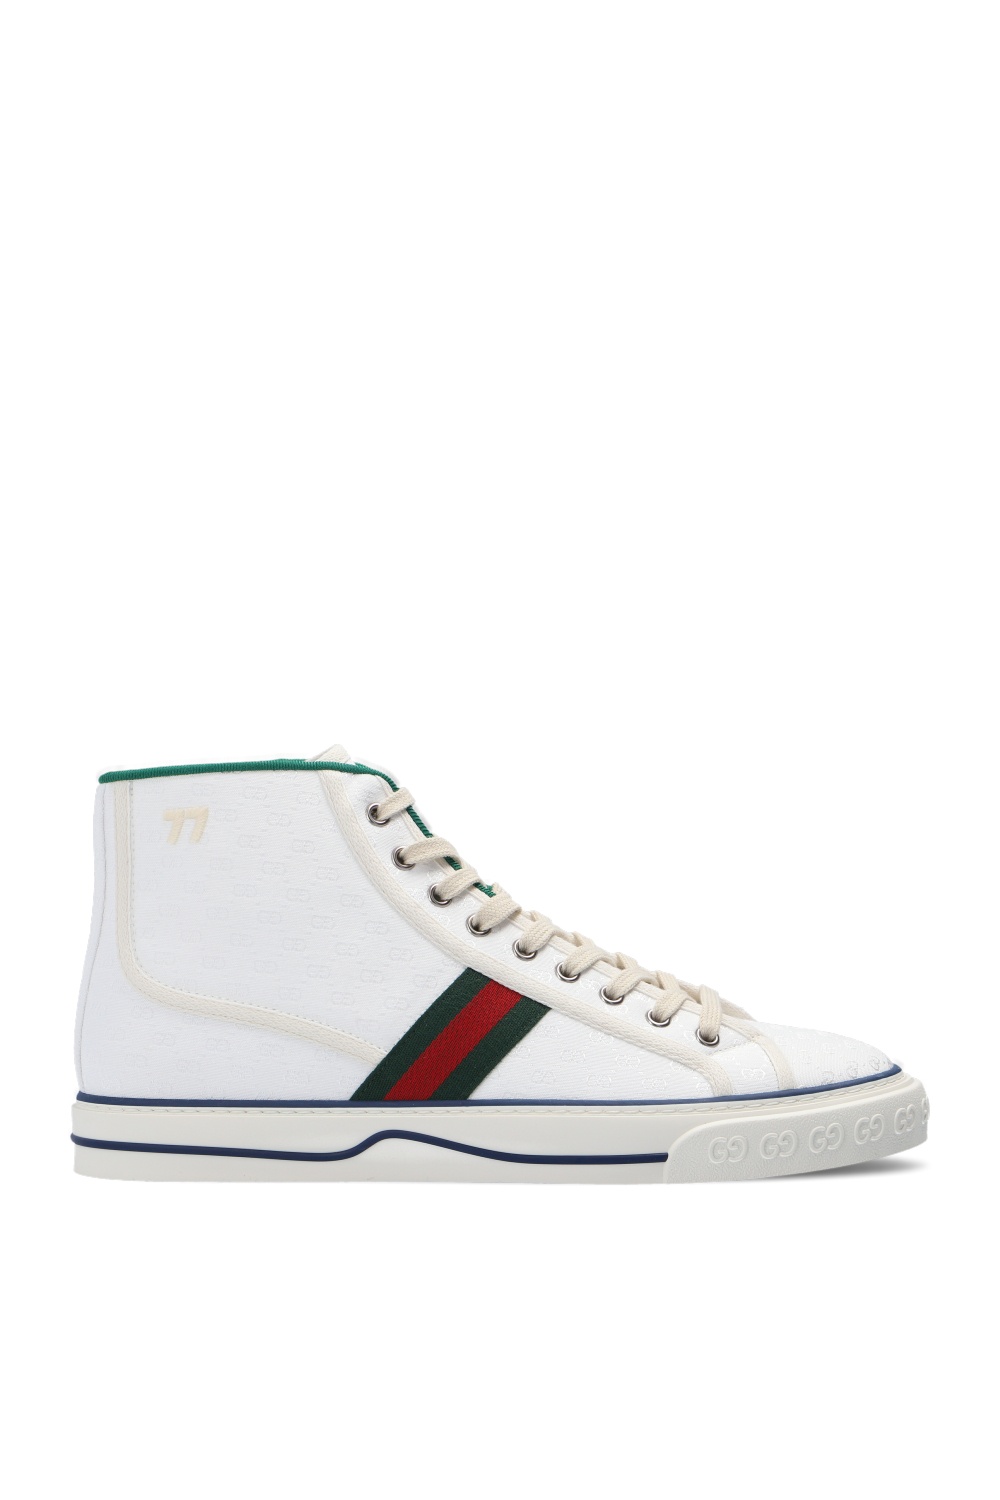 Gucci Logo sneakers